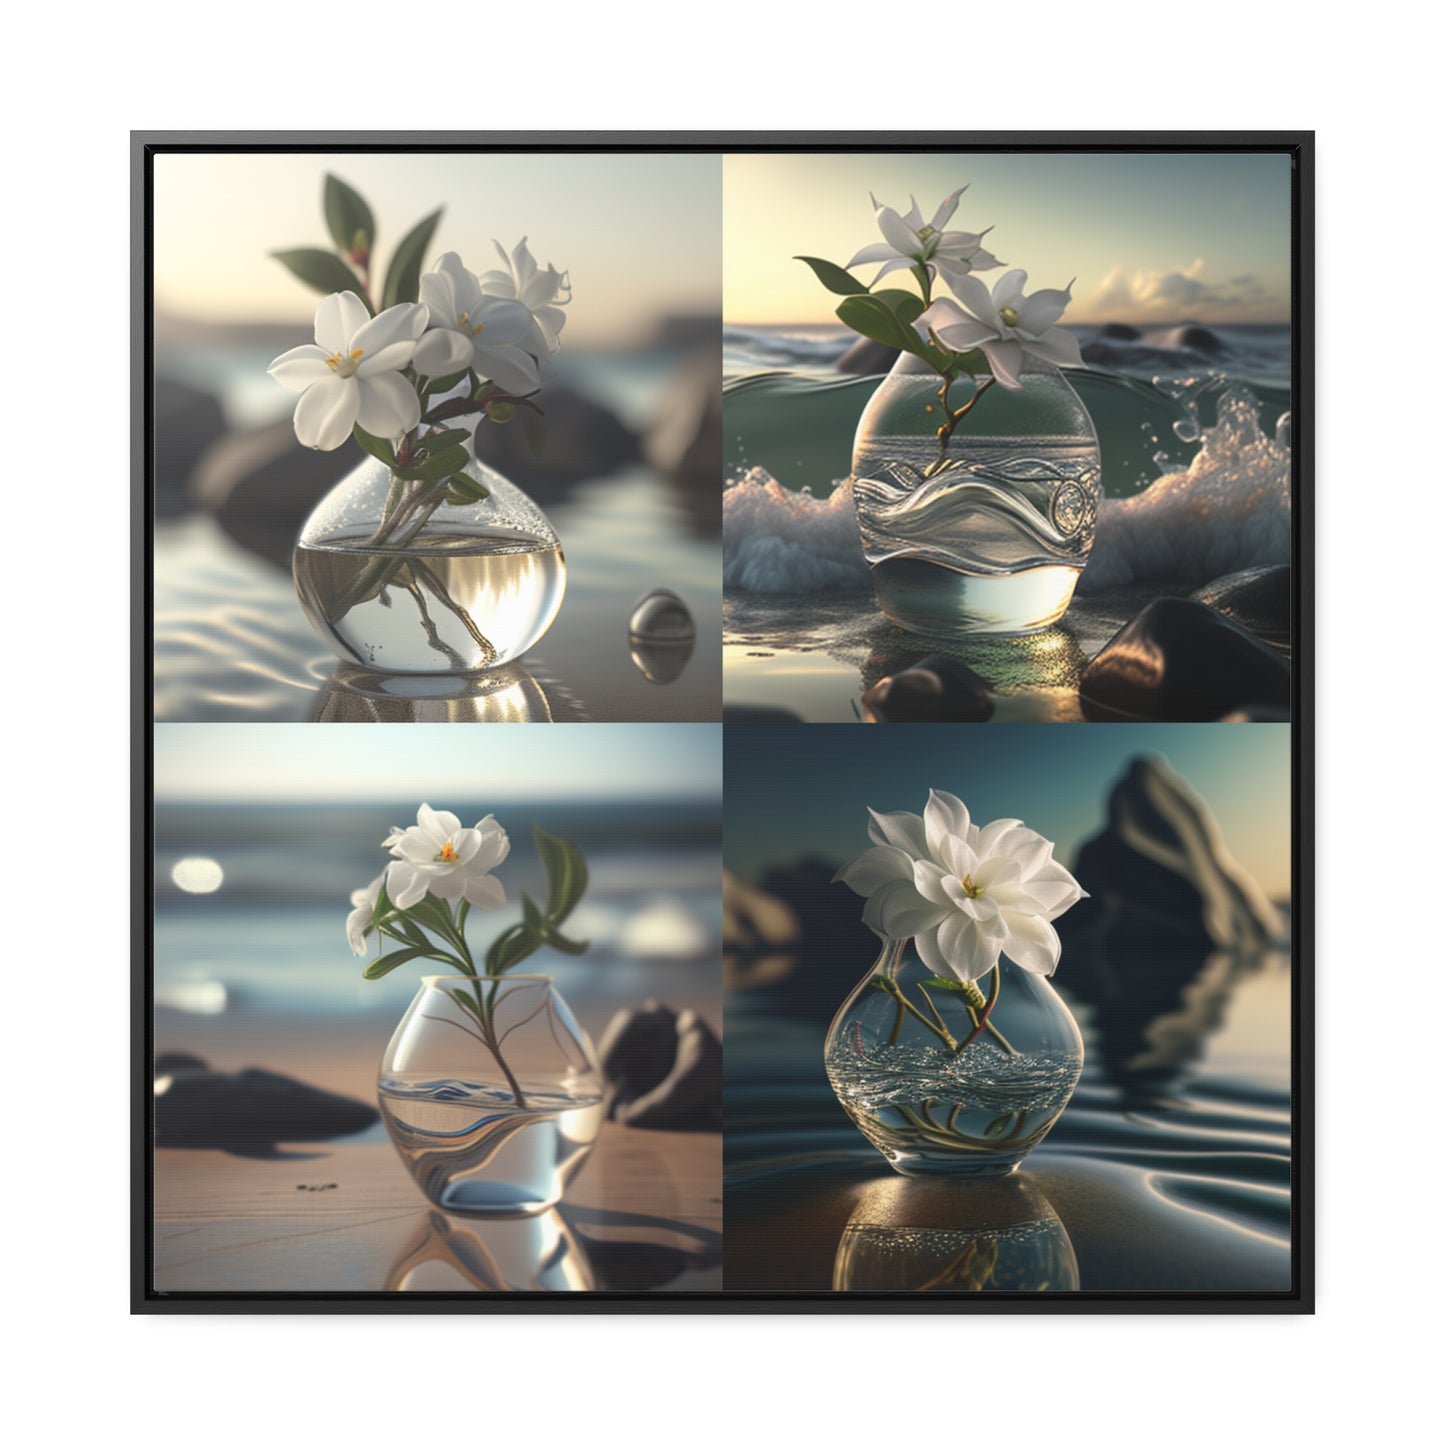 Gallery Canvas Wraps, Square Frame Jasmine glass vase 5